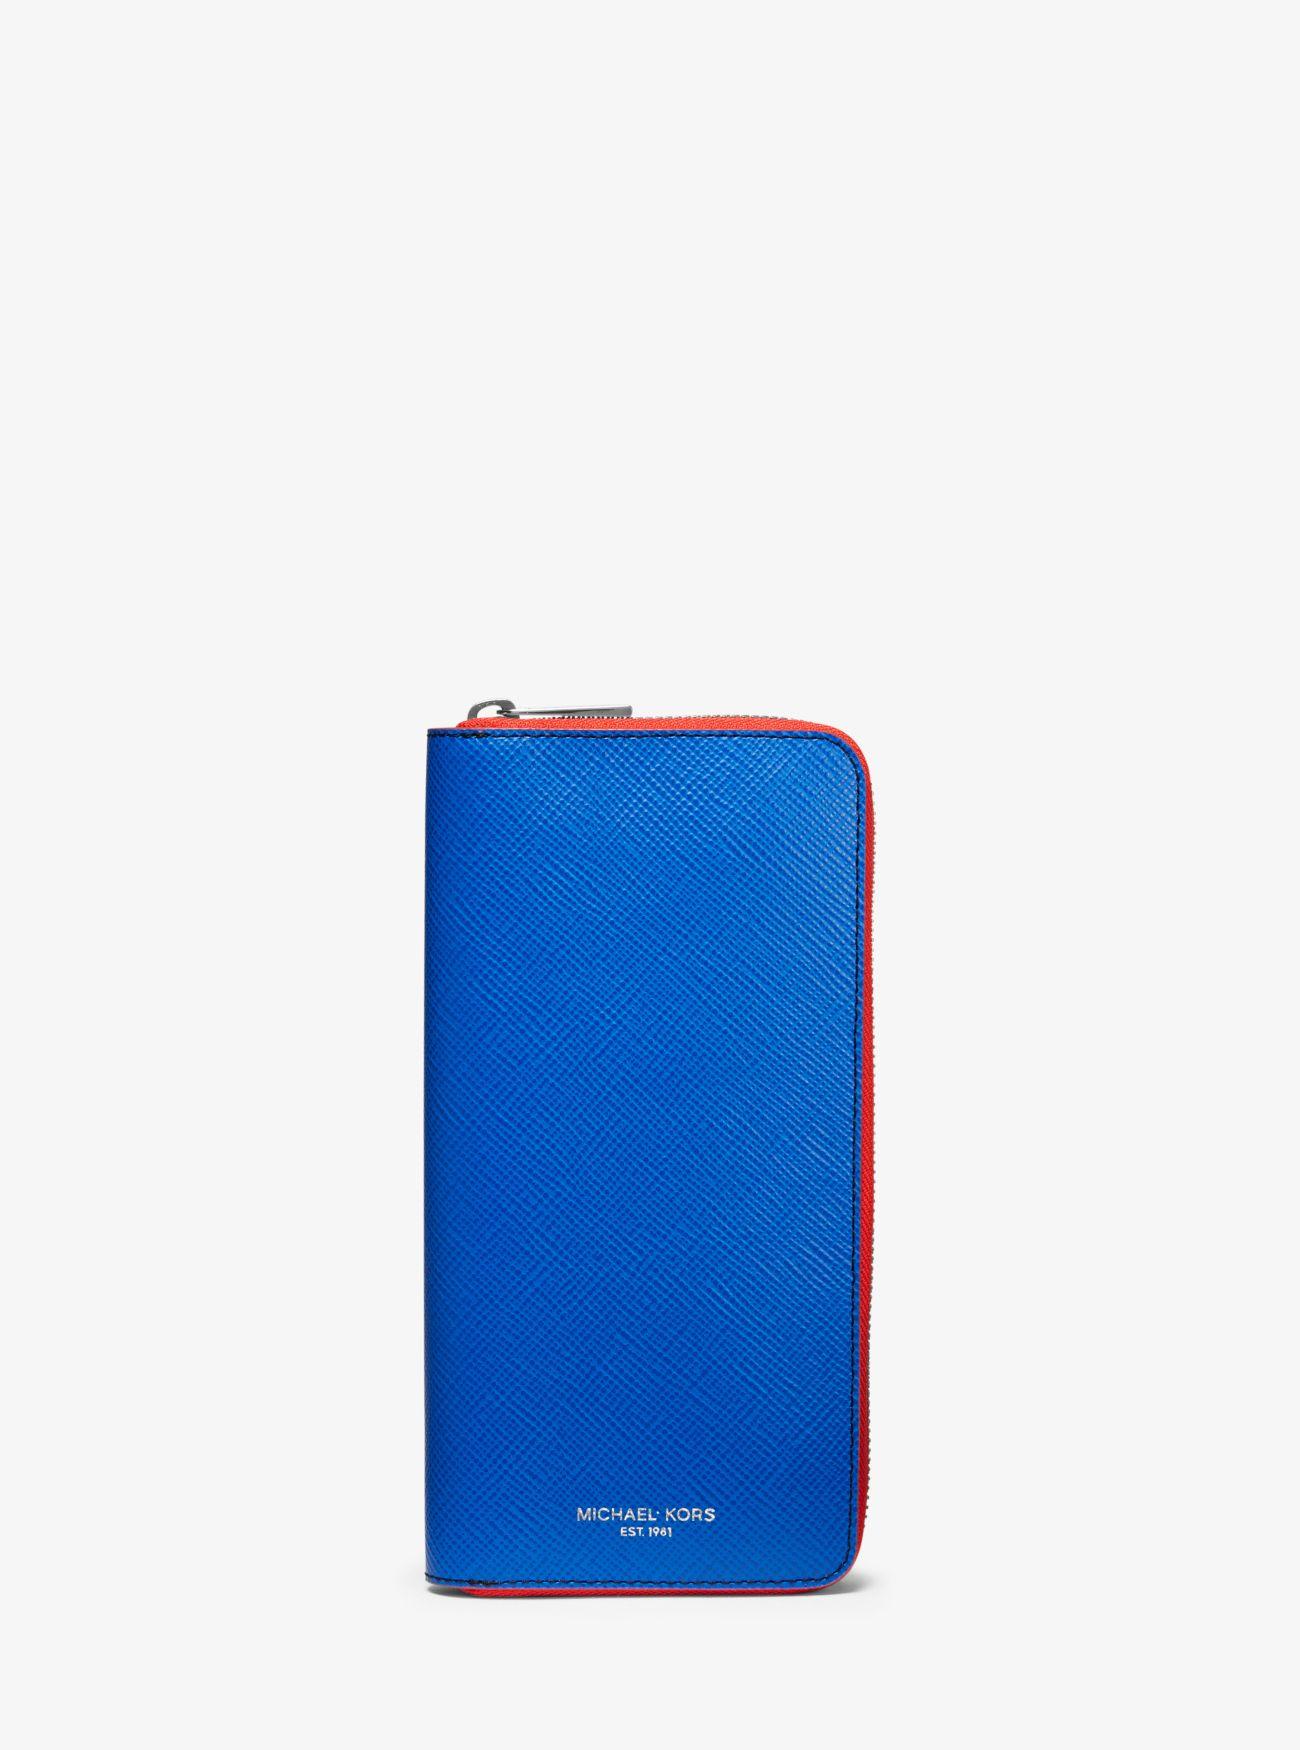 Michael Kors Harrison Color-block Leather Zip-around Wallet in Blue for Men - Lyst